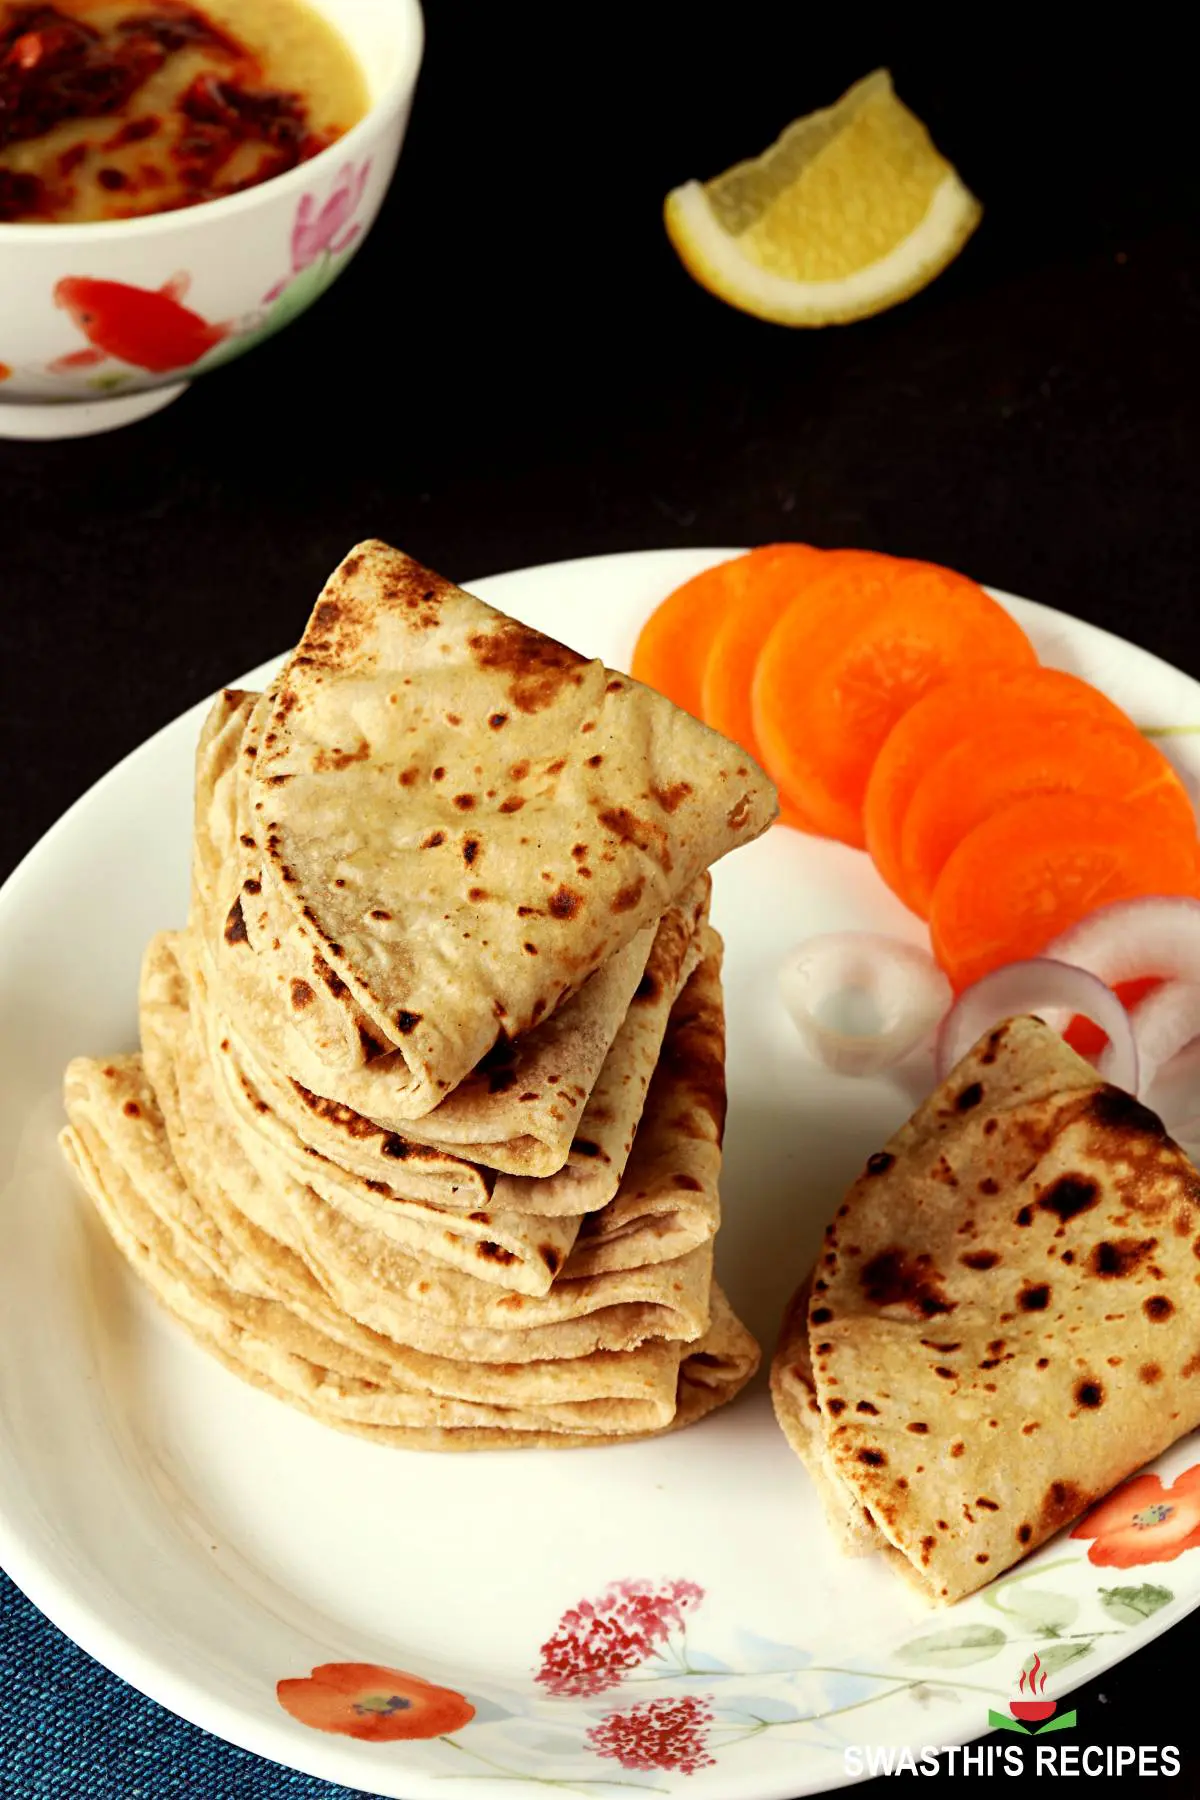 Chapati Recipe (Indian Flatbread)